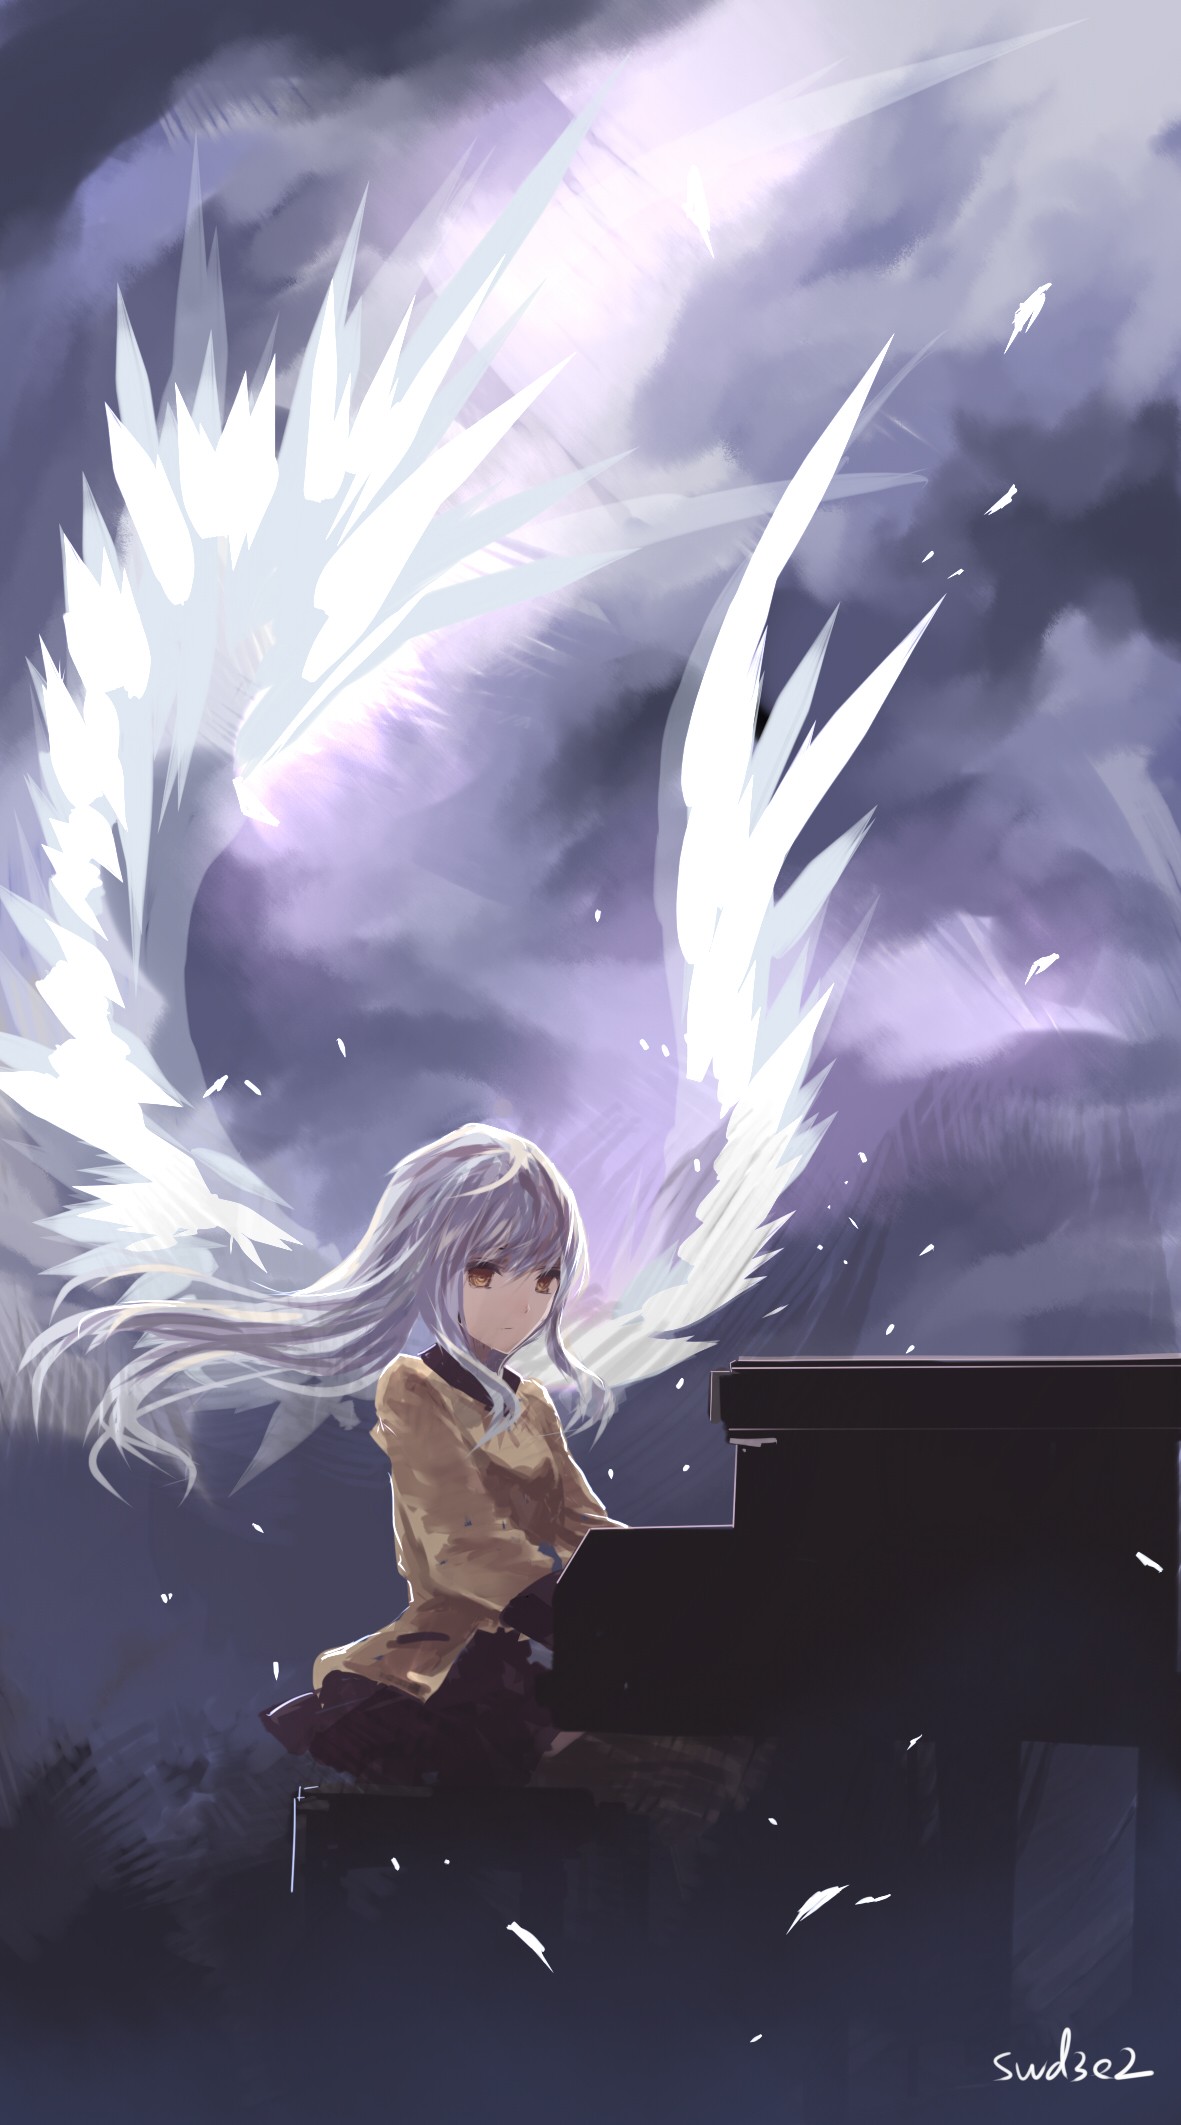 Anime 1181x2125 Angel Beats! Tachibana Kanade Swd3e2 long hair yellow eyes school uniform wings piano feathers anime girls anime musical instrument